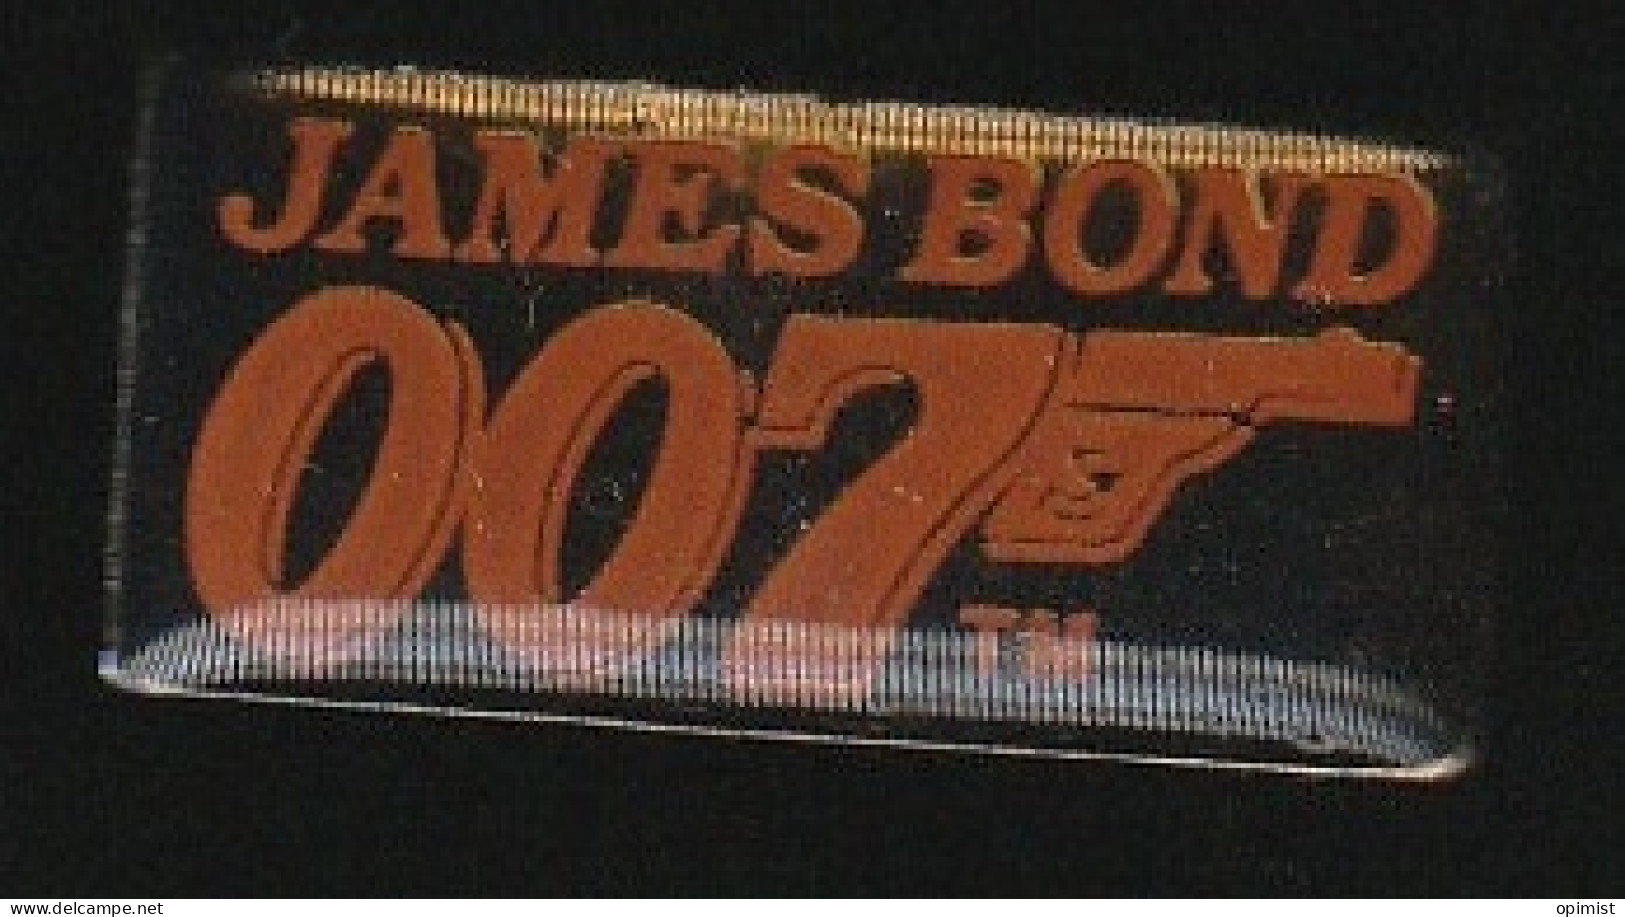 77404-Pin's. James Bond 007.Cinema.signé 1962 Danjaq.sa United Artists Co. - Cinéma